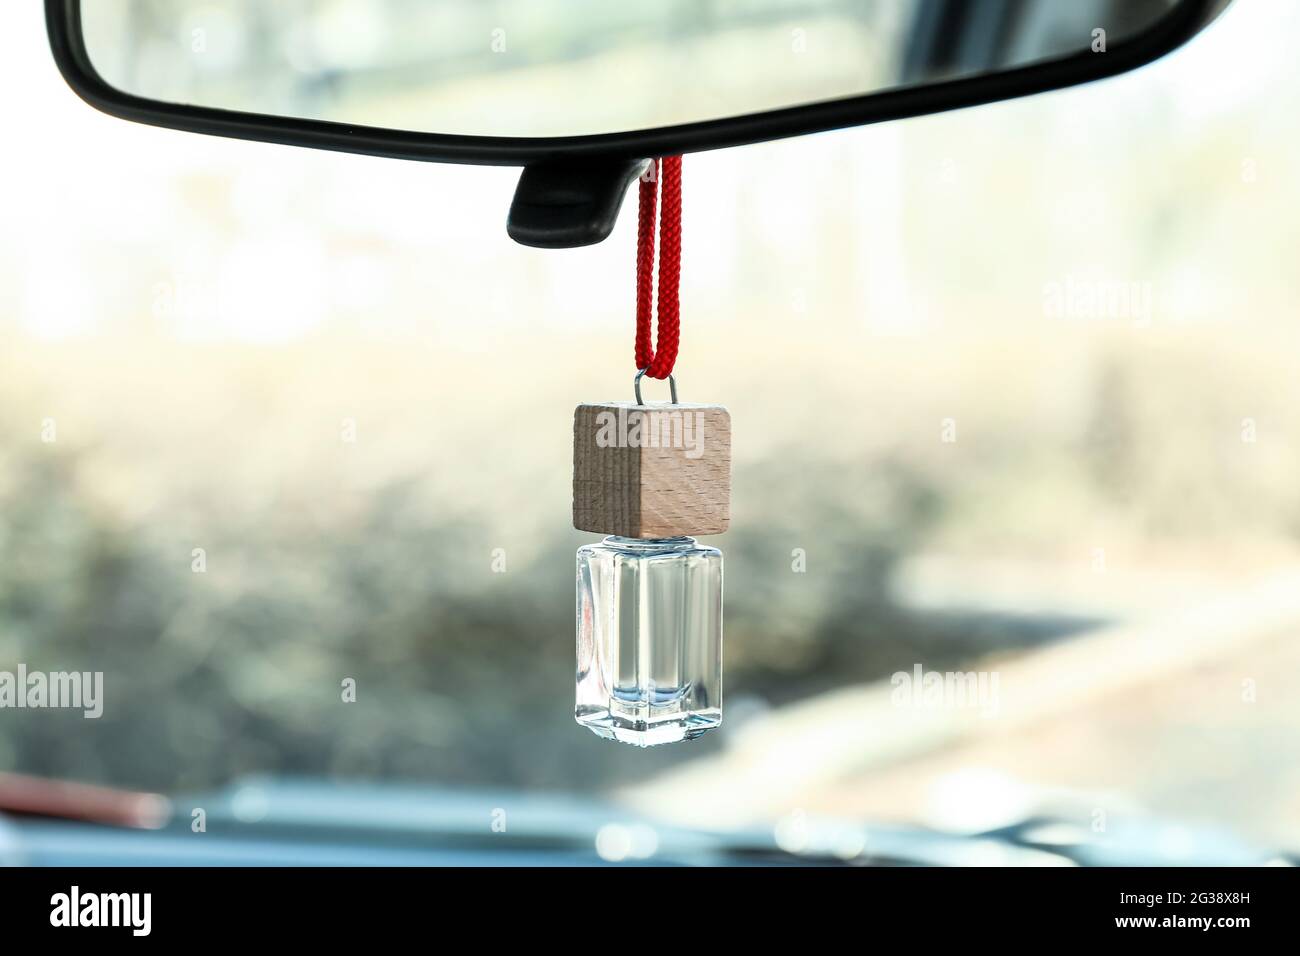 Air freshener hanging in car, closeup Stock Photo - Alamy